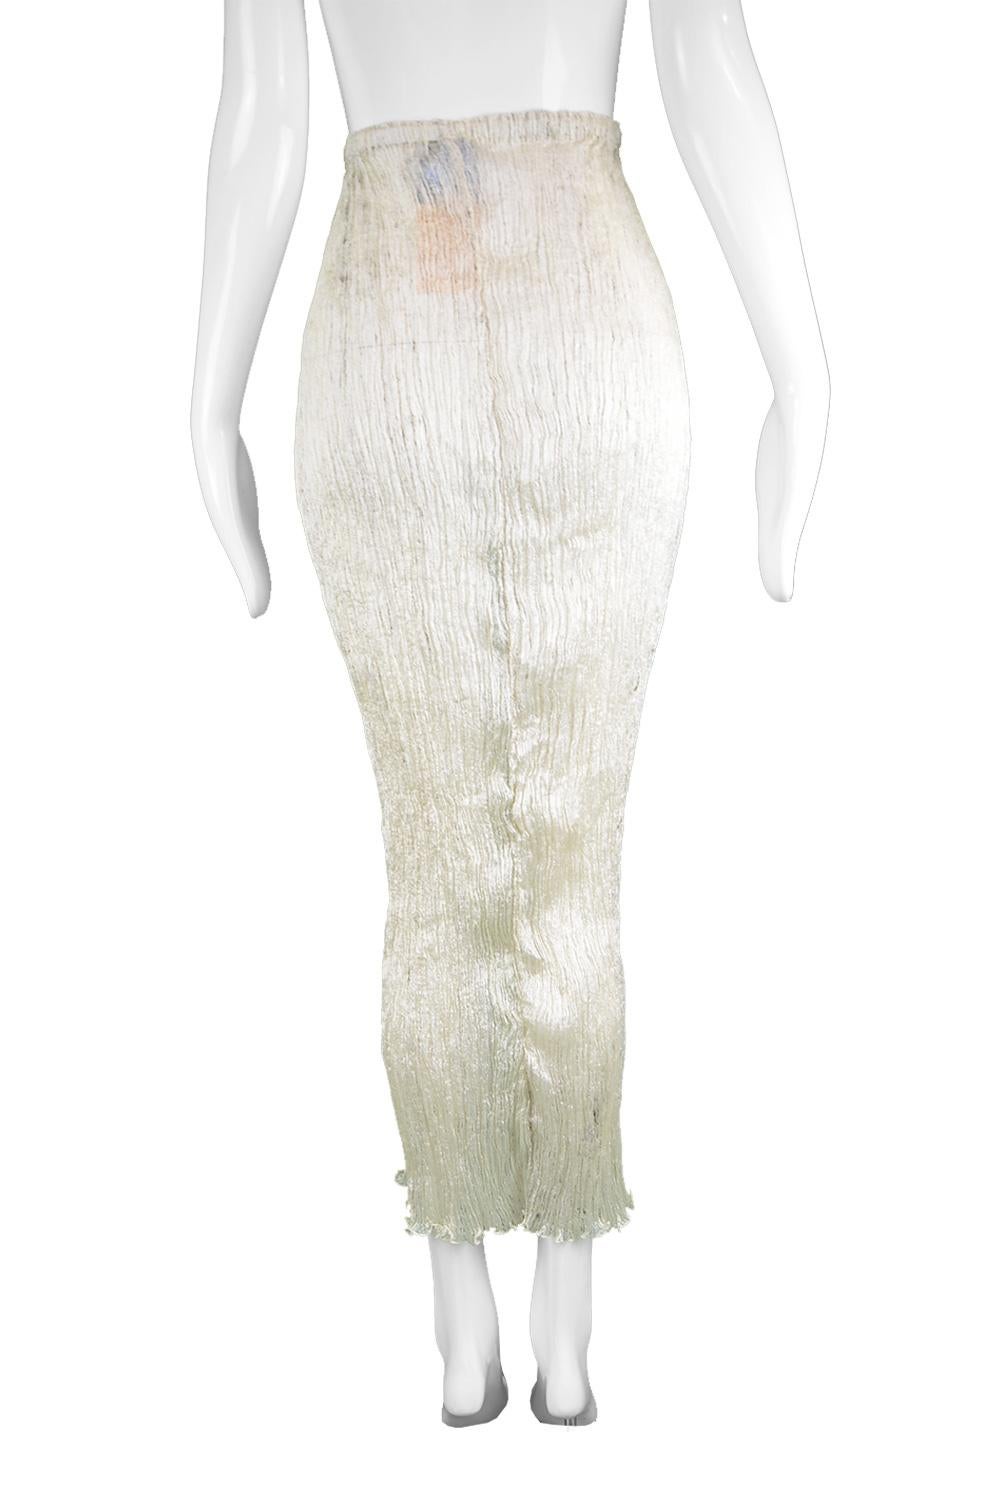 Zandra Rhodes Vintage Fortuny Pleated Organza Artisanal Maxi Skirt / Dress 2